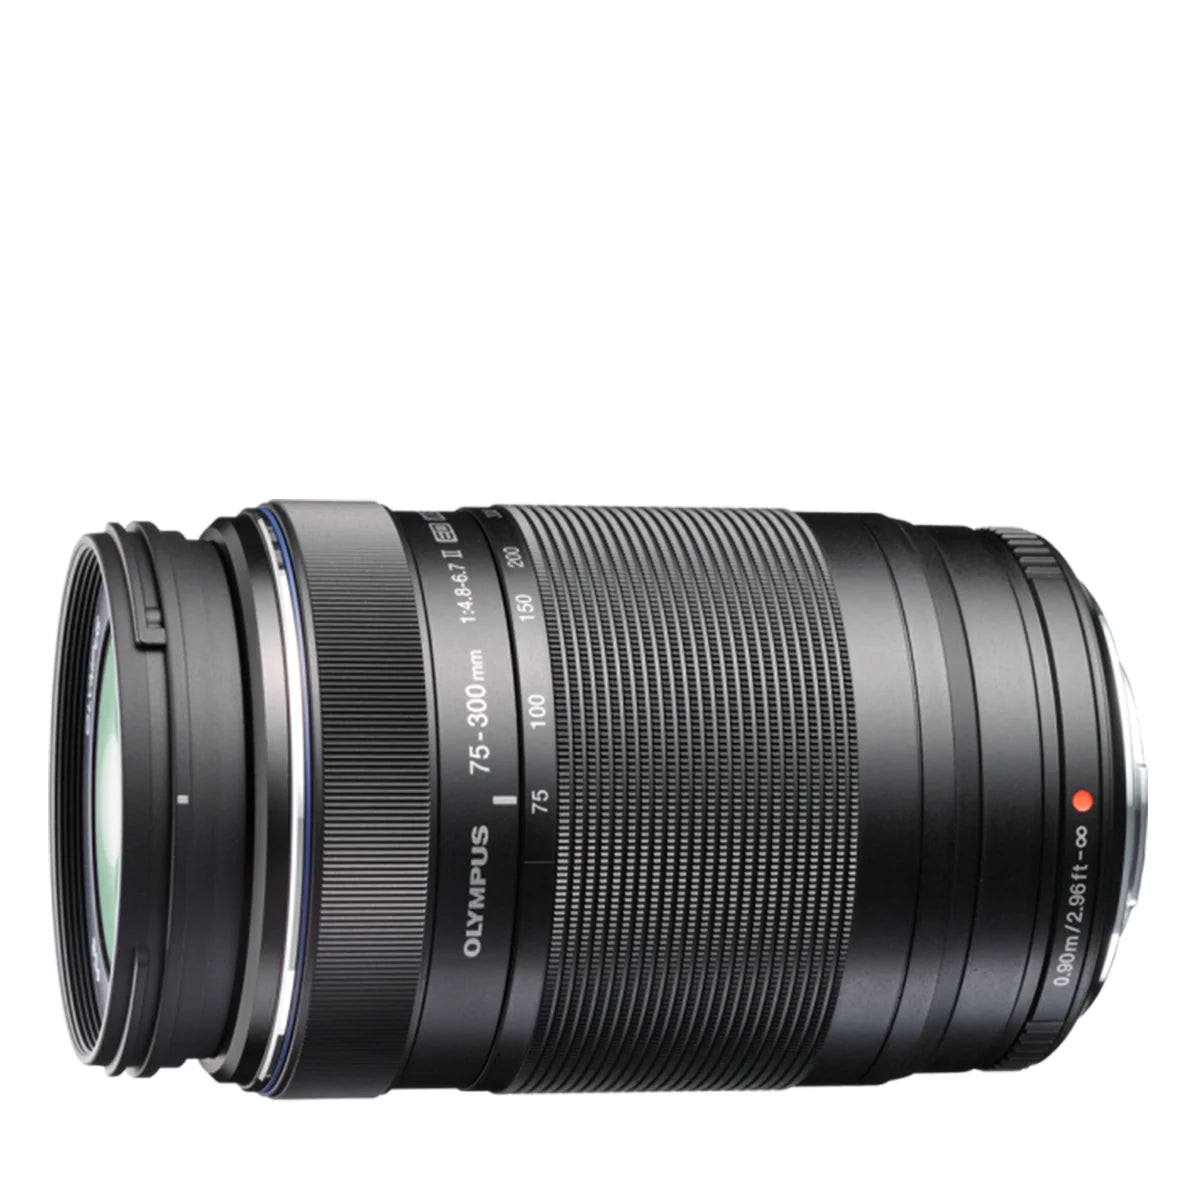 Olympus 75-300mm f4.8-6.7 II Lens - Black MFT Lens